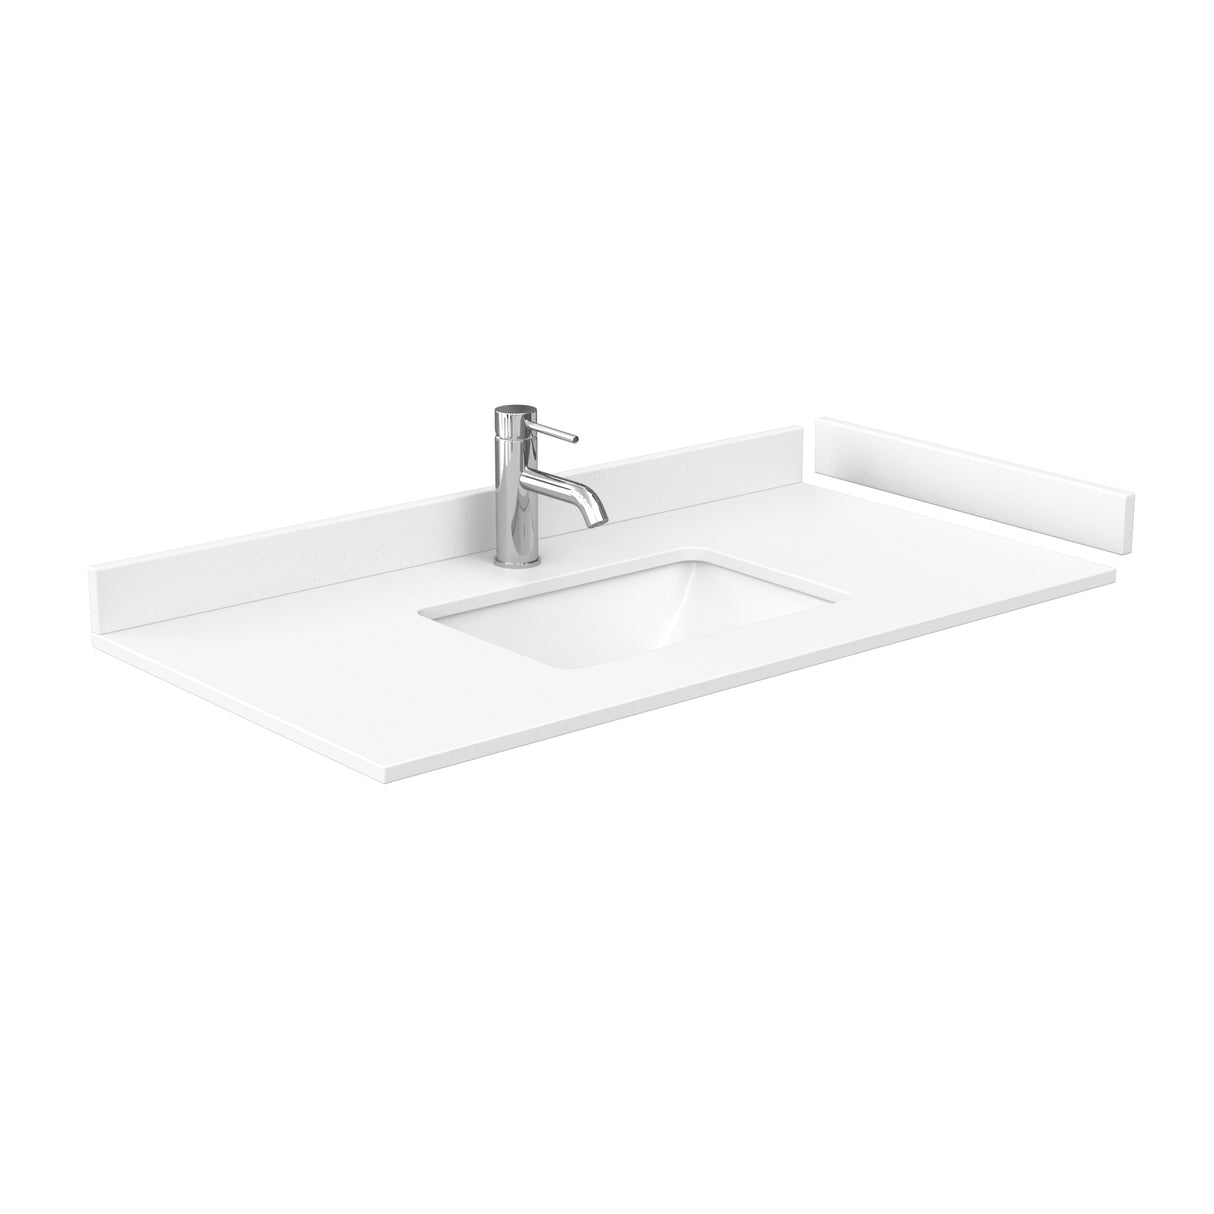 Miranda 42 Inch Single Bathroom Vanity in White White Cultured Marble Countertop Undermount Square Sink Matte Black Trim